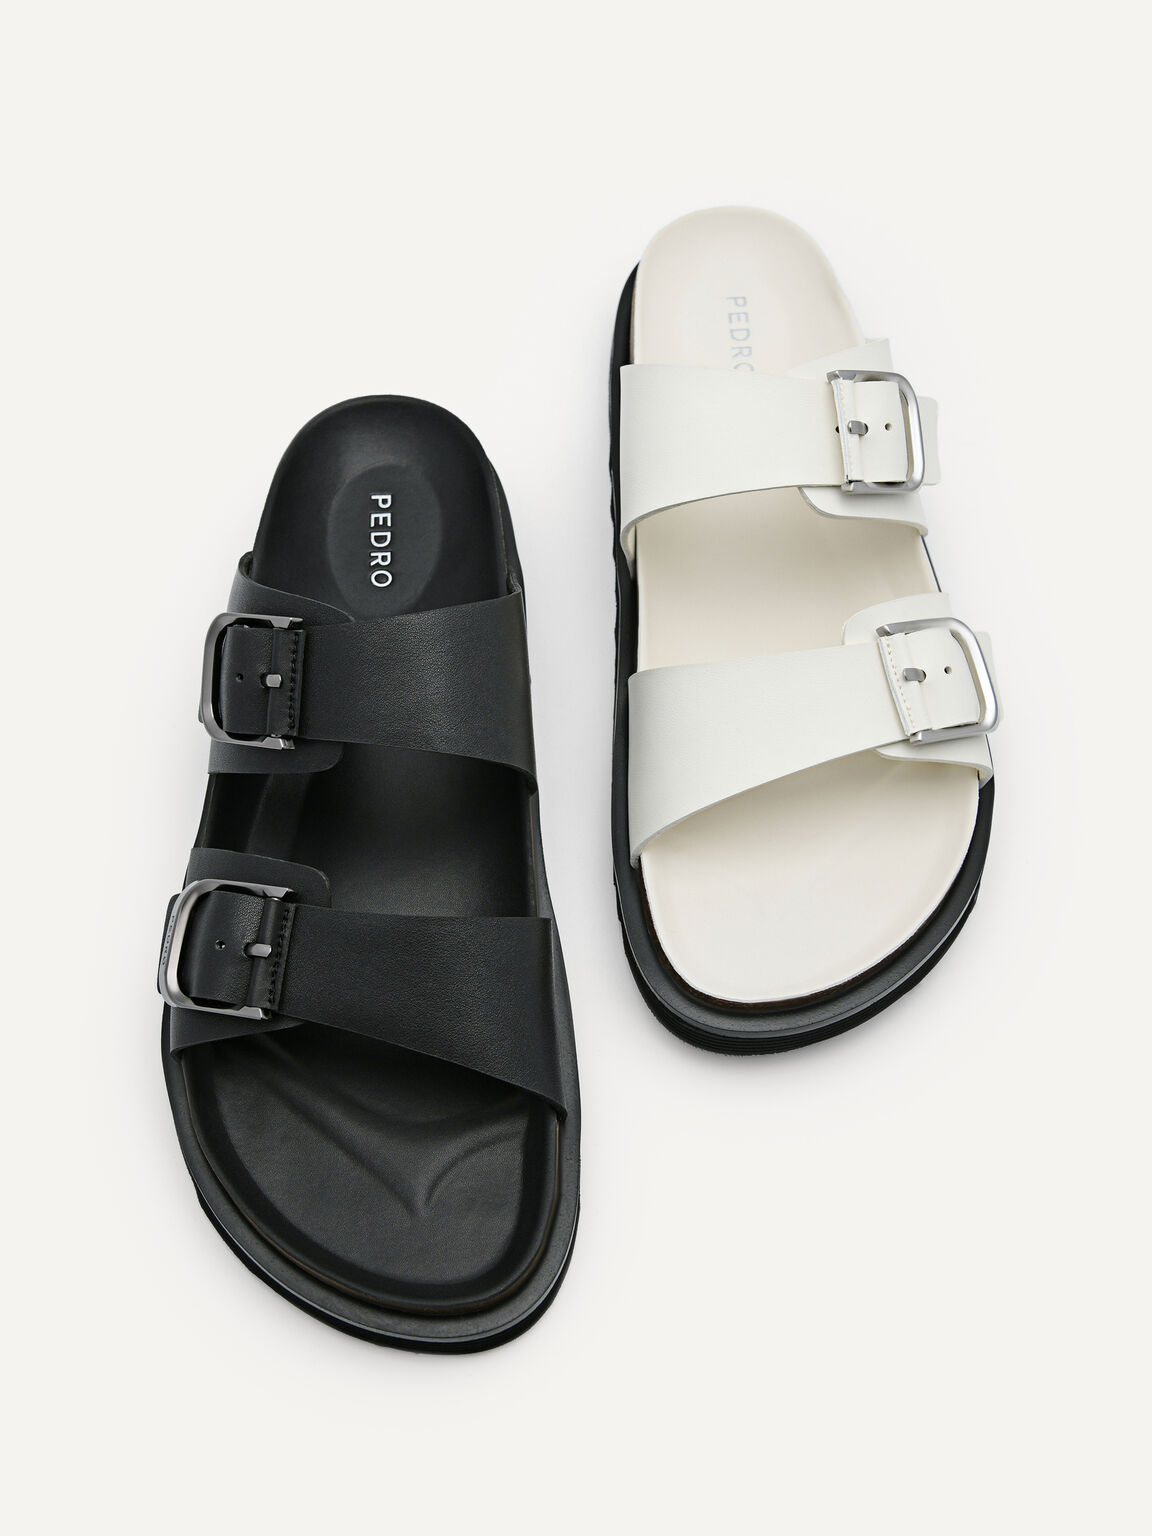 Men's Helix Slide Sandals, White, hi-res